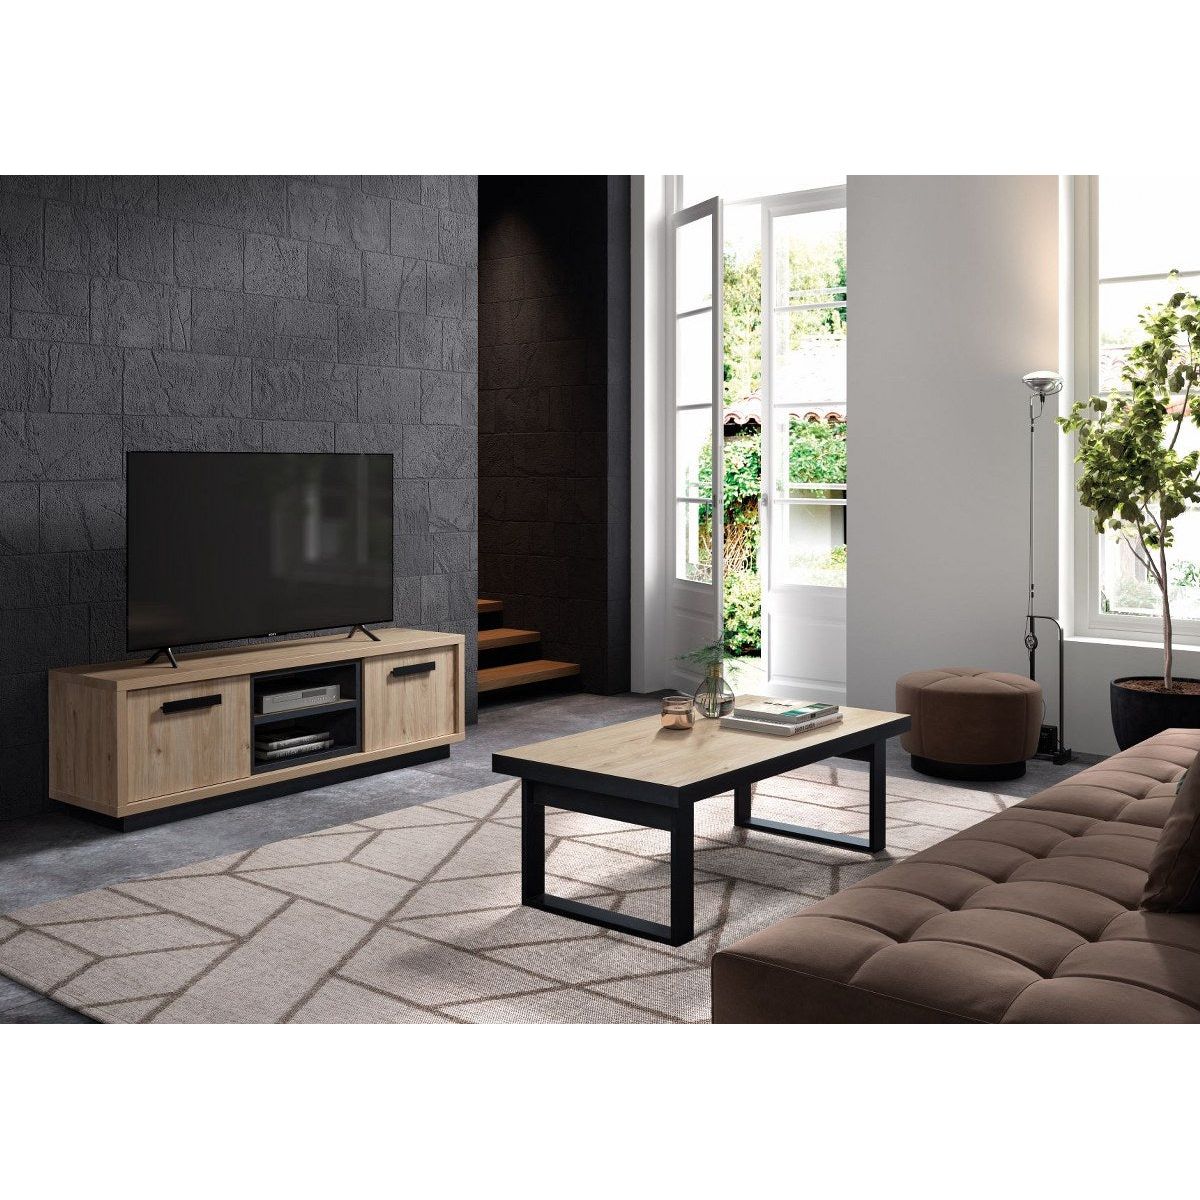 TV-meubel | Meubelserie Tilly | bruin, naturel, zwart | 168